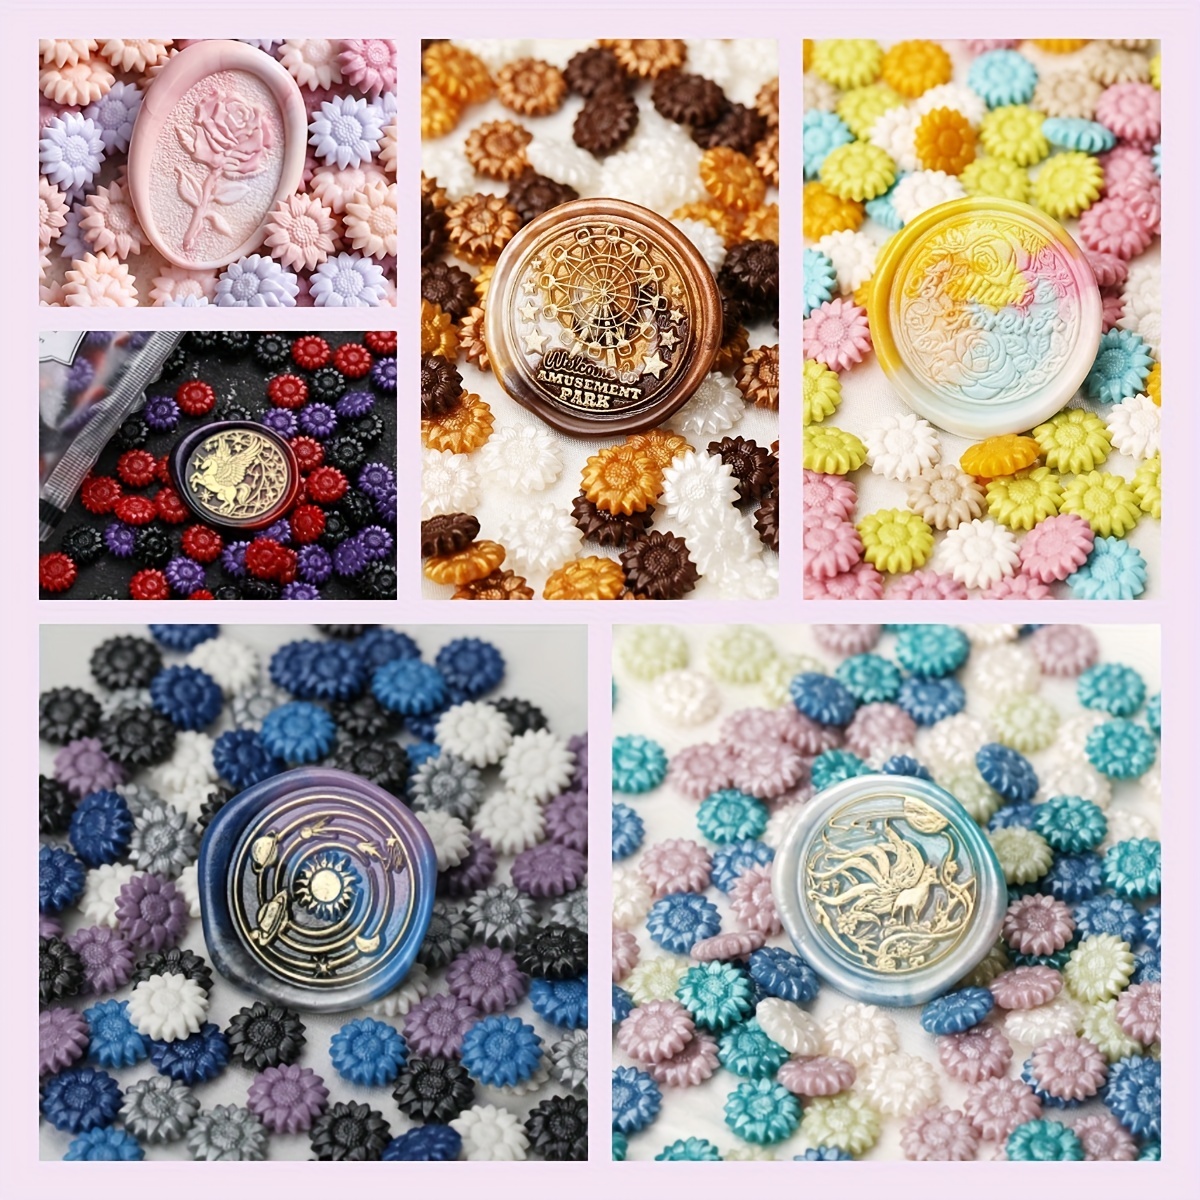 Sealing Wax - Heart Shaped Jelly & Glitter Sealing Wax Beads (7 Colors)